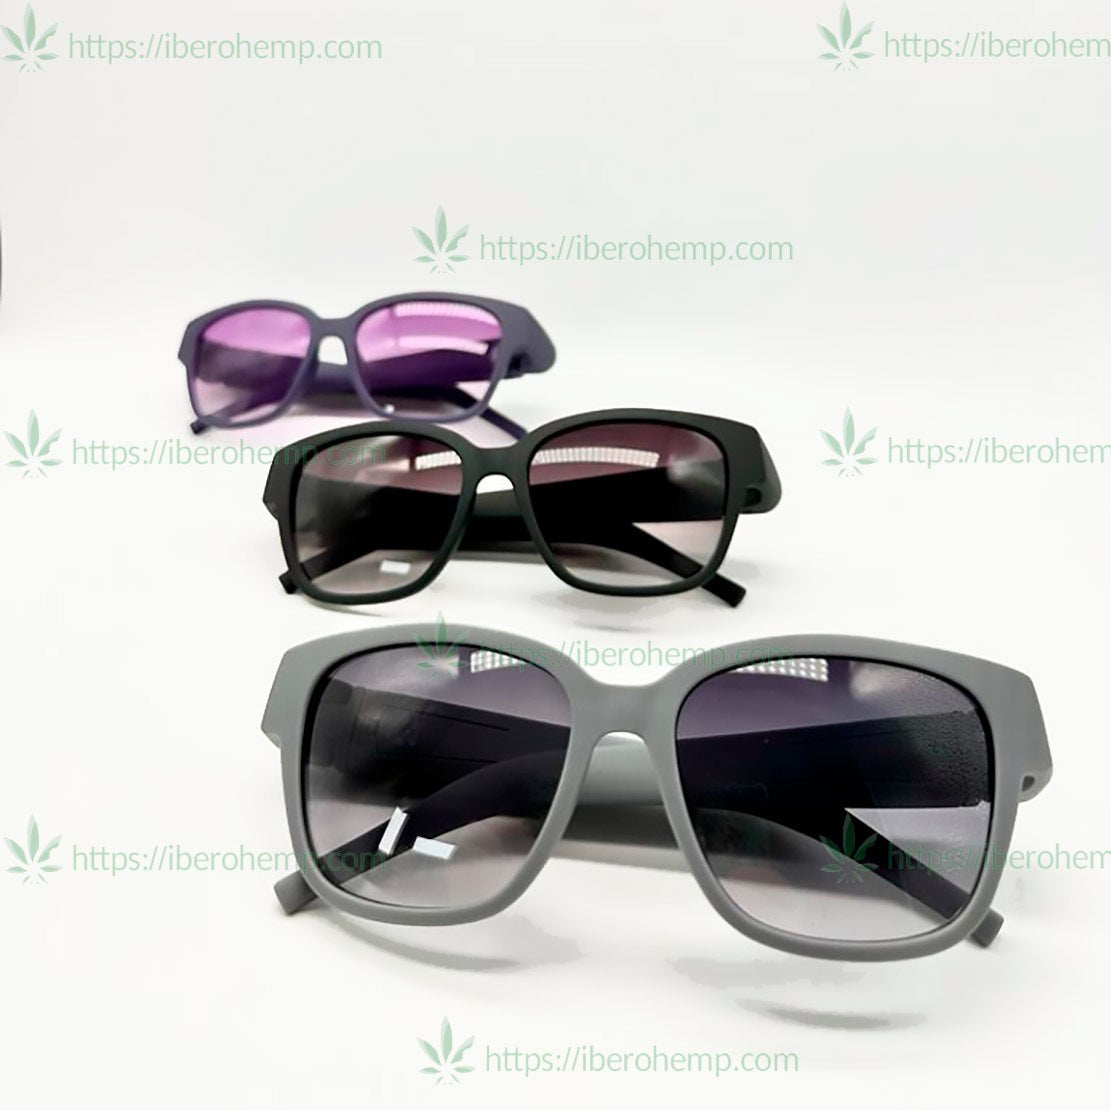 Iberohemp CBD concealment sunglasses